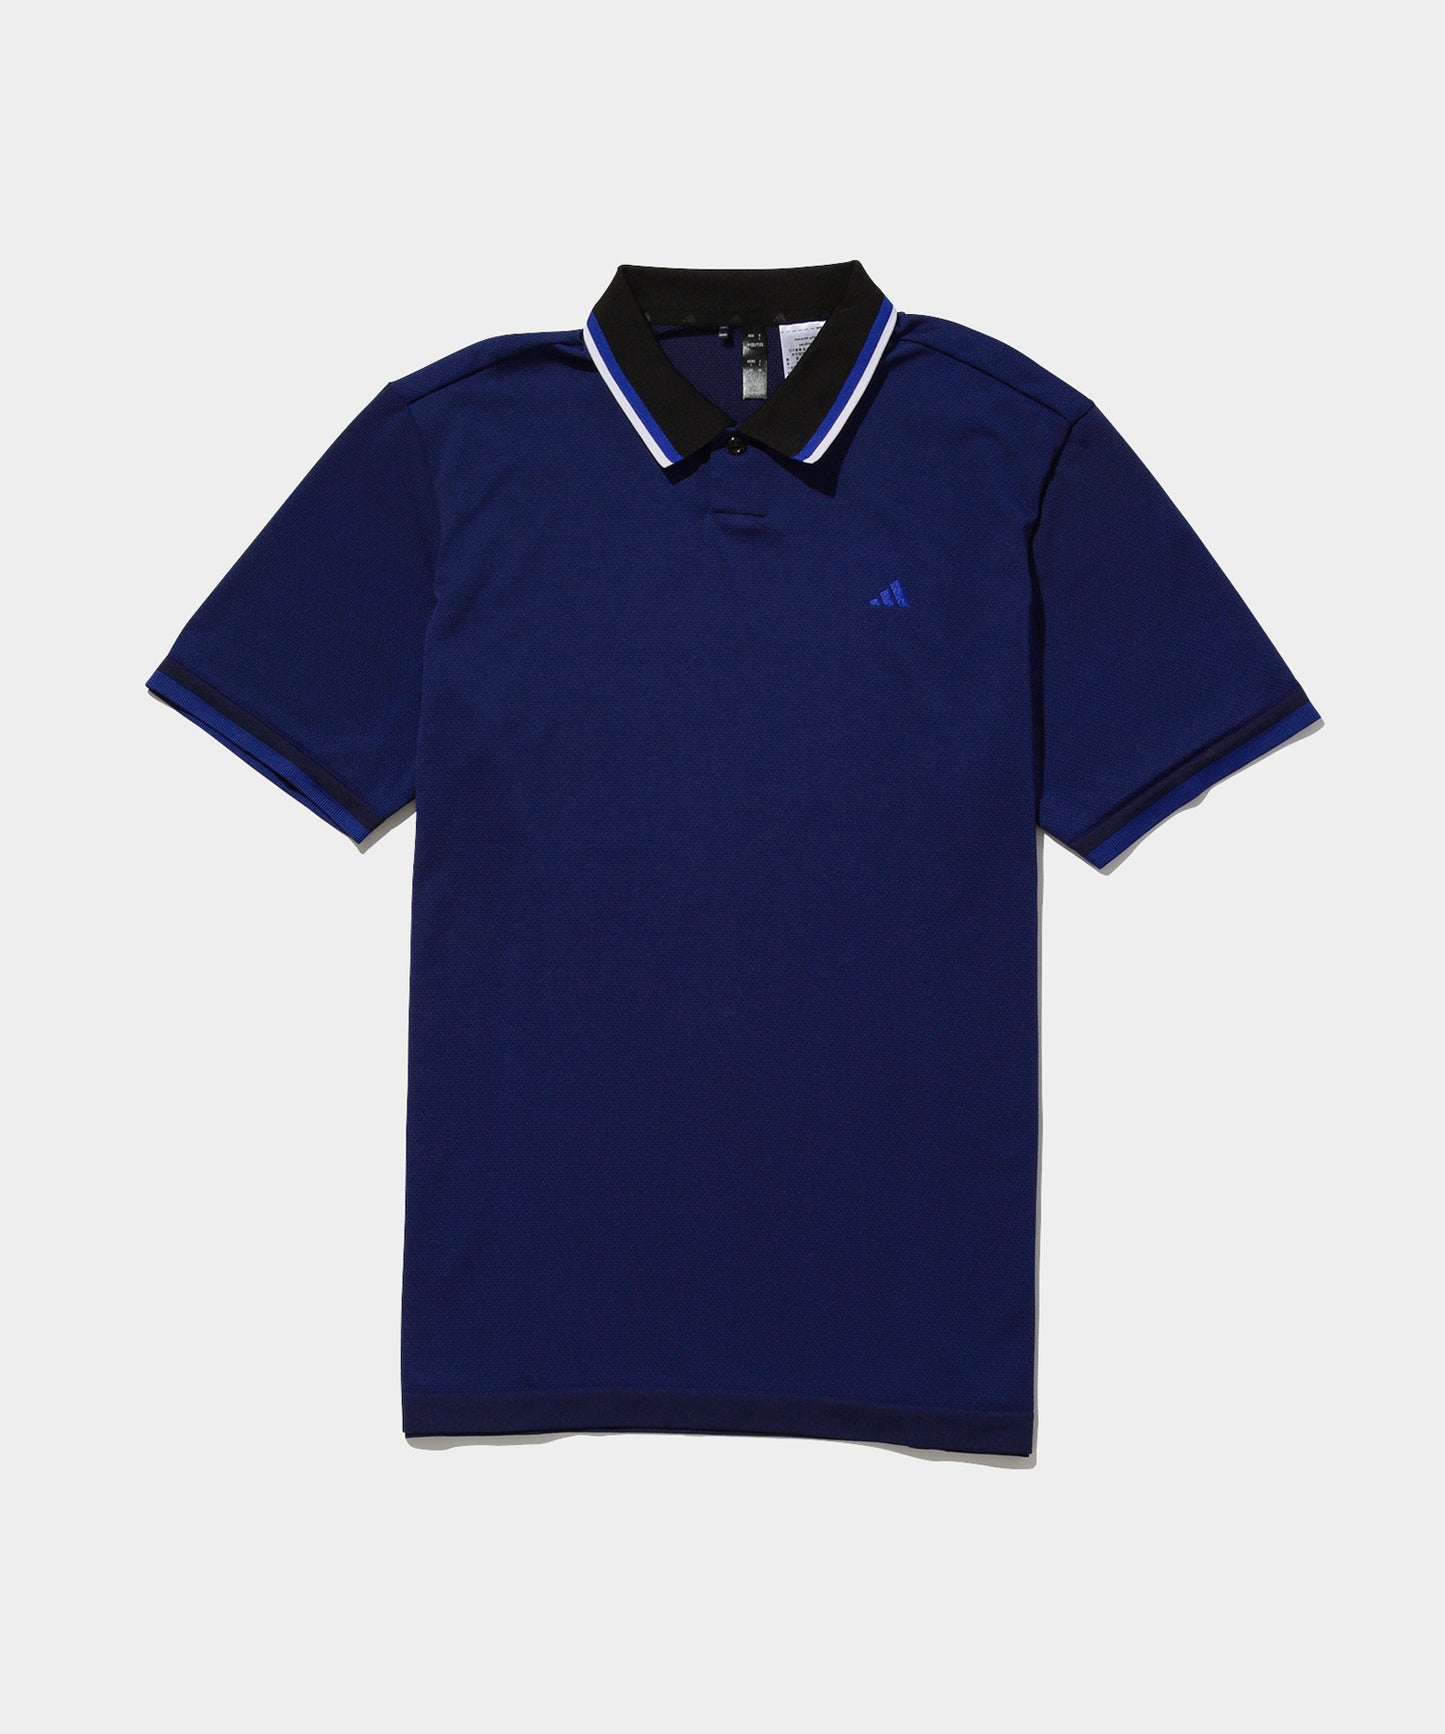 adidas PRIMEKNIT サイドシームレス 半袖ポロシャツ BLUE